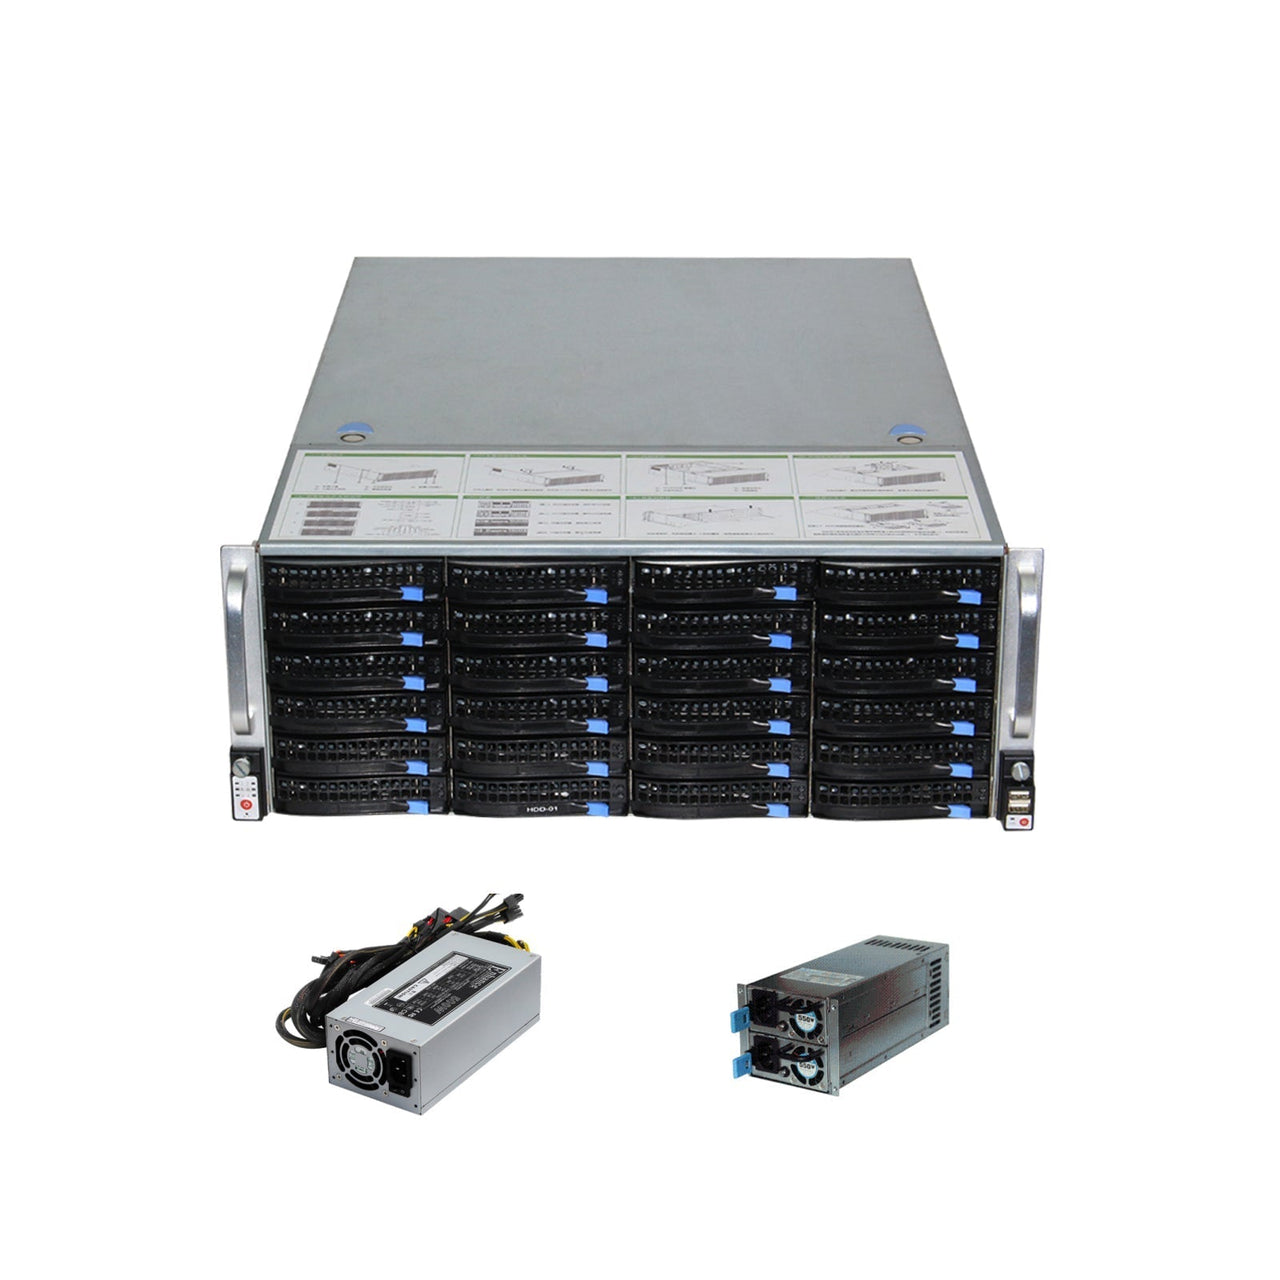 JideTech X86 Super NVR, Centralized Storage Management Device Support 256pcs Cameras Input(NVSS8724-256-R)